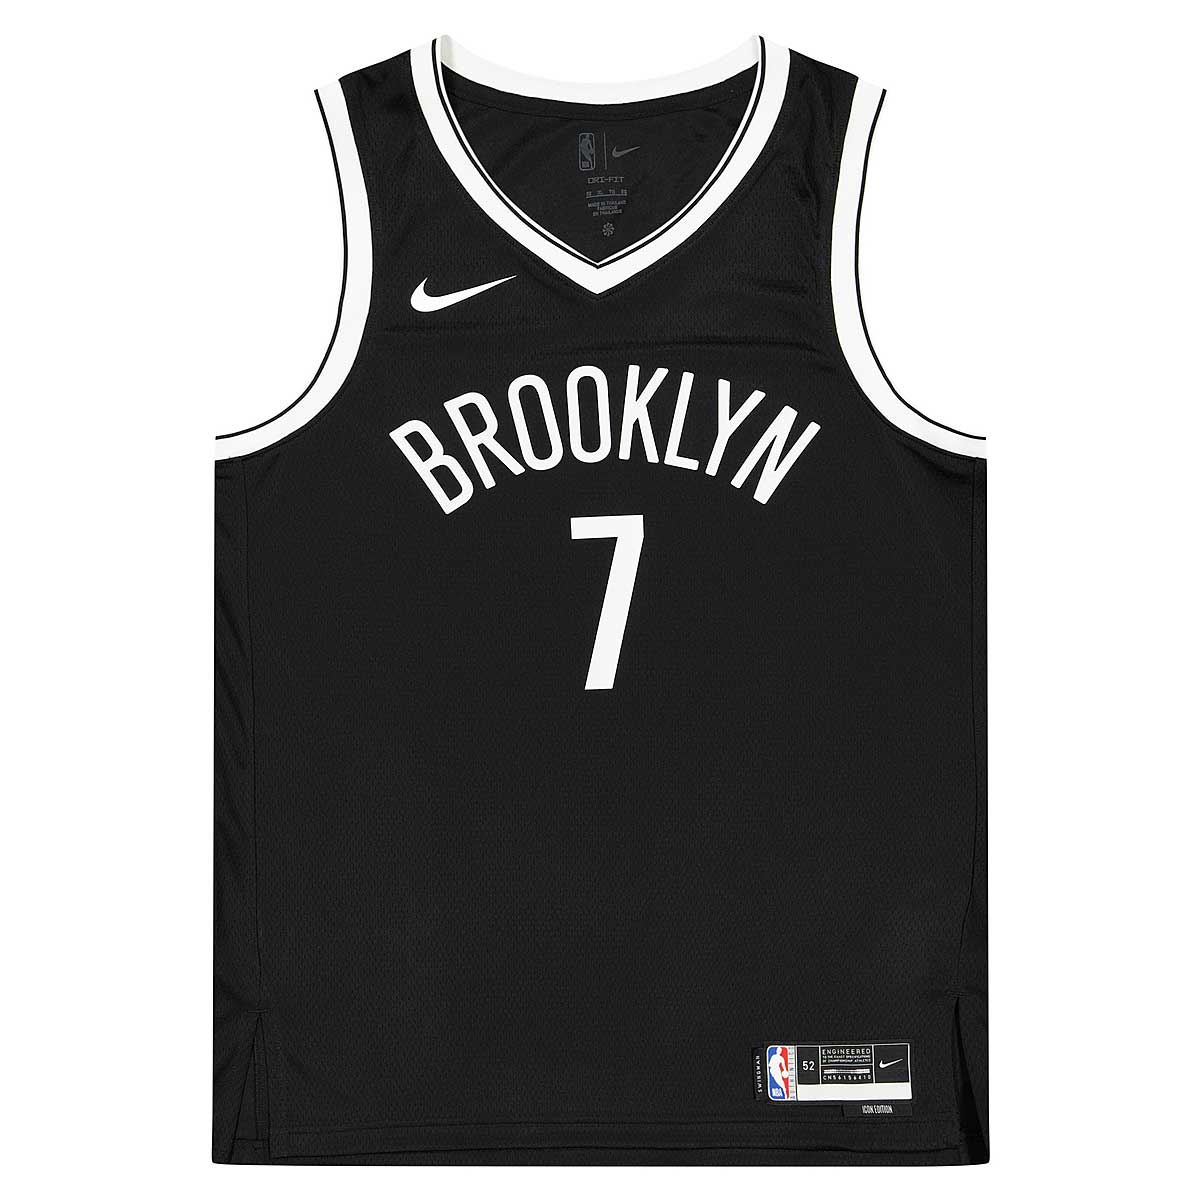 Compre NBA BROOKLYN NETS DRI-FIT ICON SWINGMAN JERSEY KEVIN DURANT por EUR en KICKZ.com!